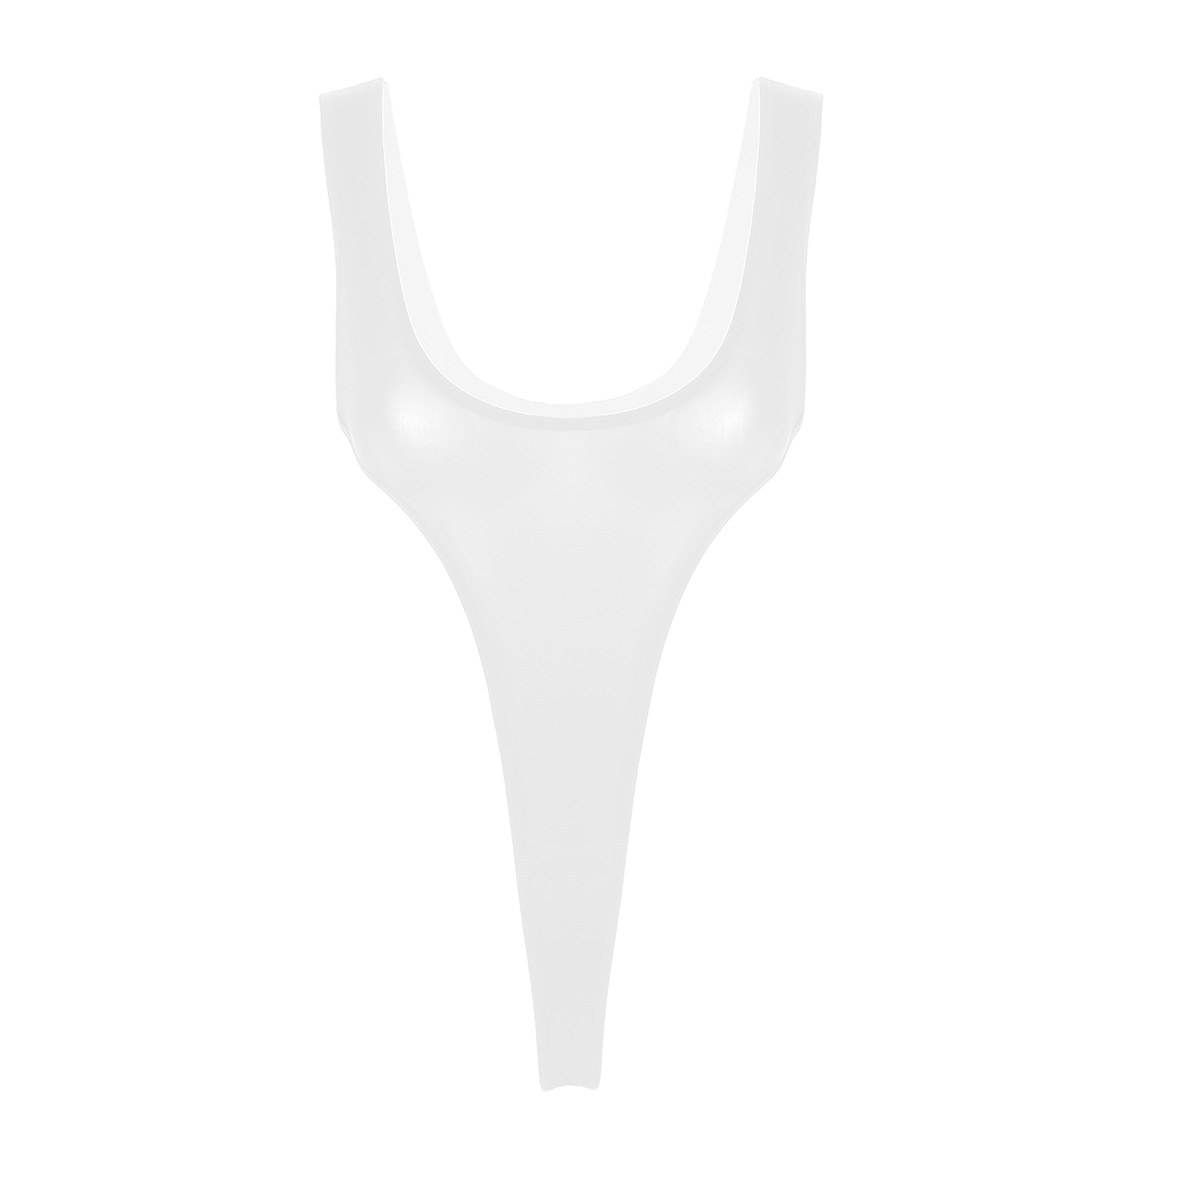 YIZYIF Womens See Through High Cut One Piece Swimsuit Backless Thong  Brazilian Bikini Swimwear White-A One Size 